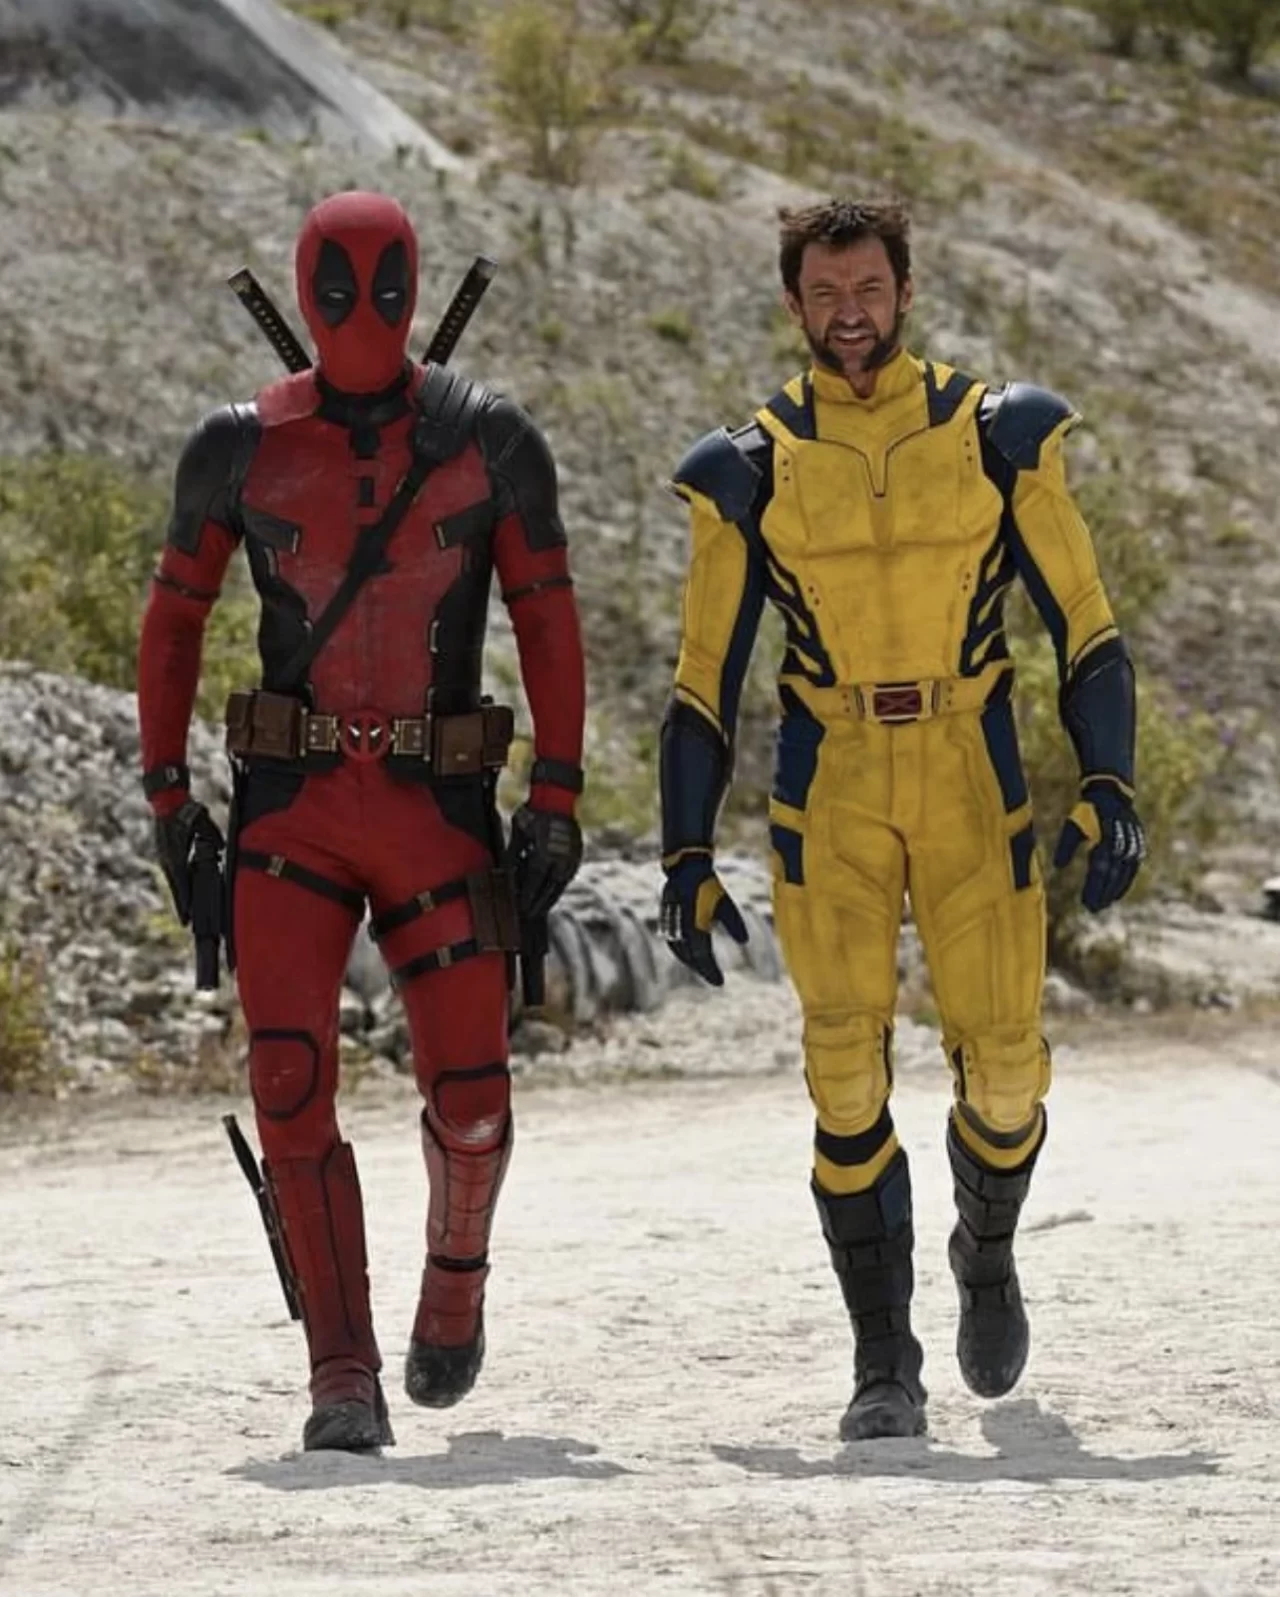 Vaza foto de Wolverine de Hugh Jackman em Deadpool 3